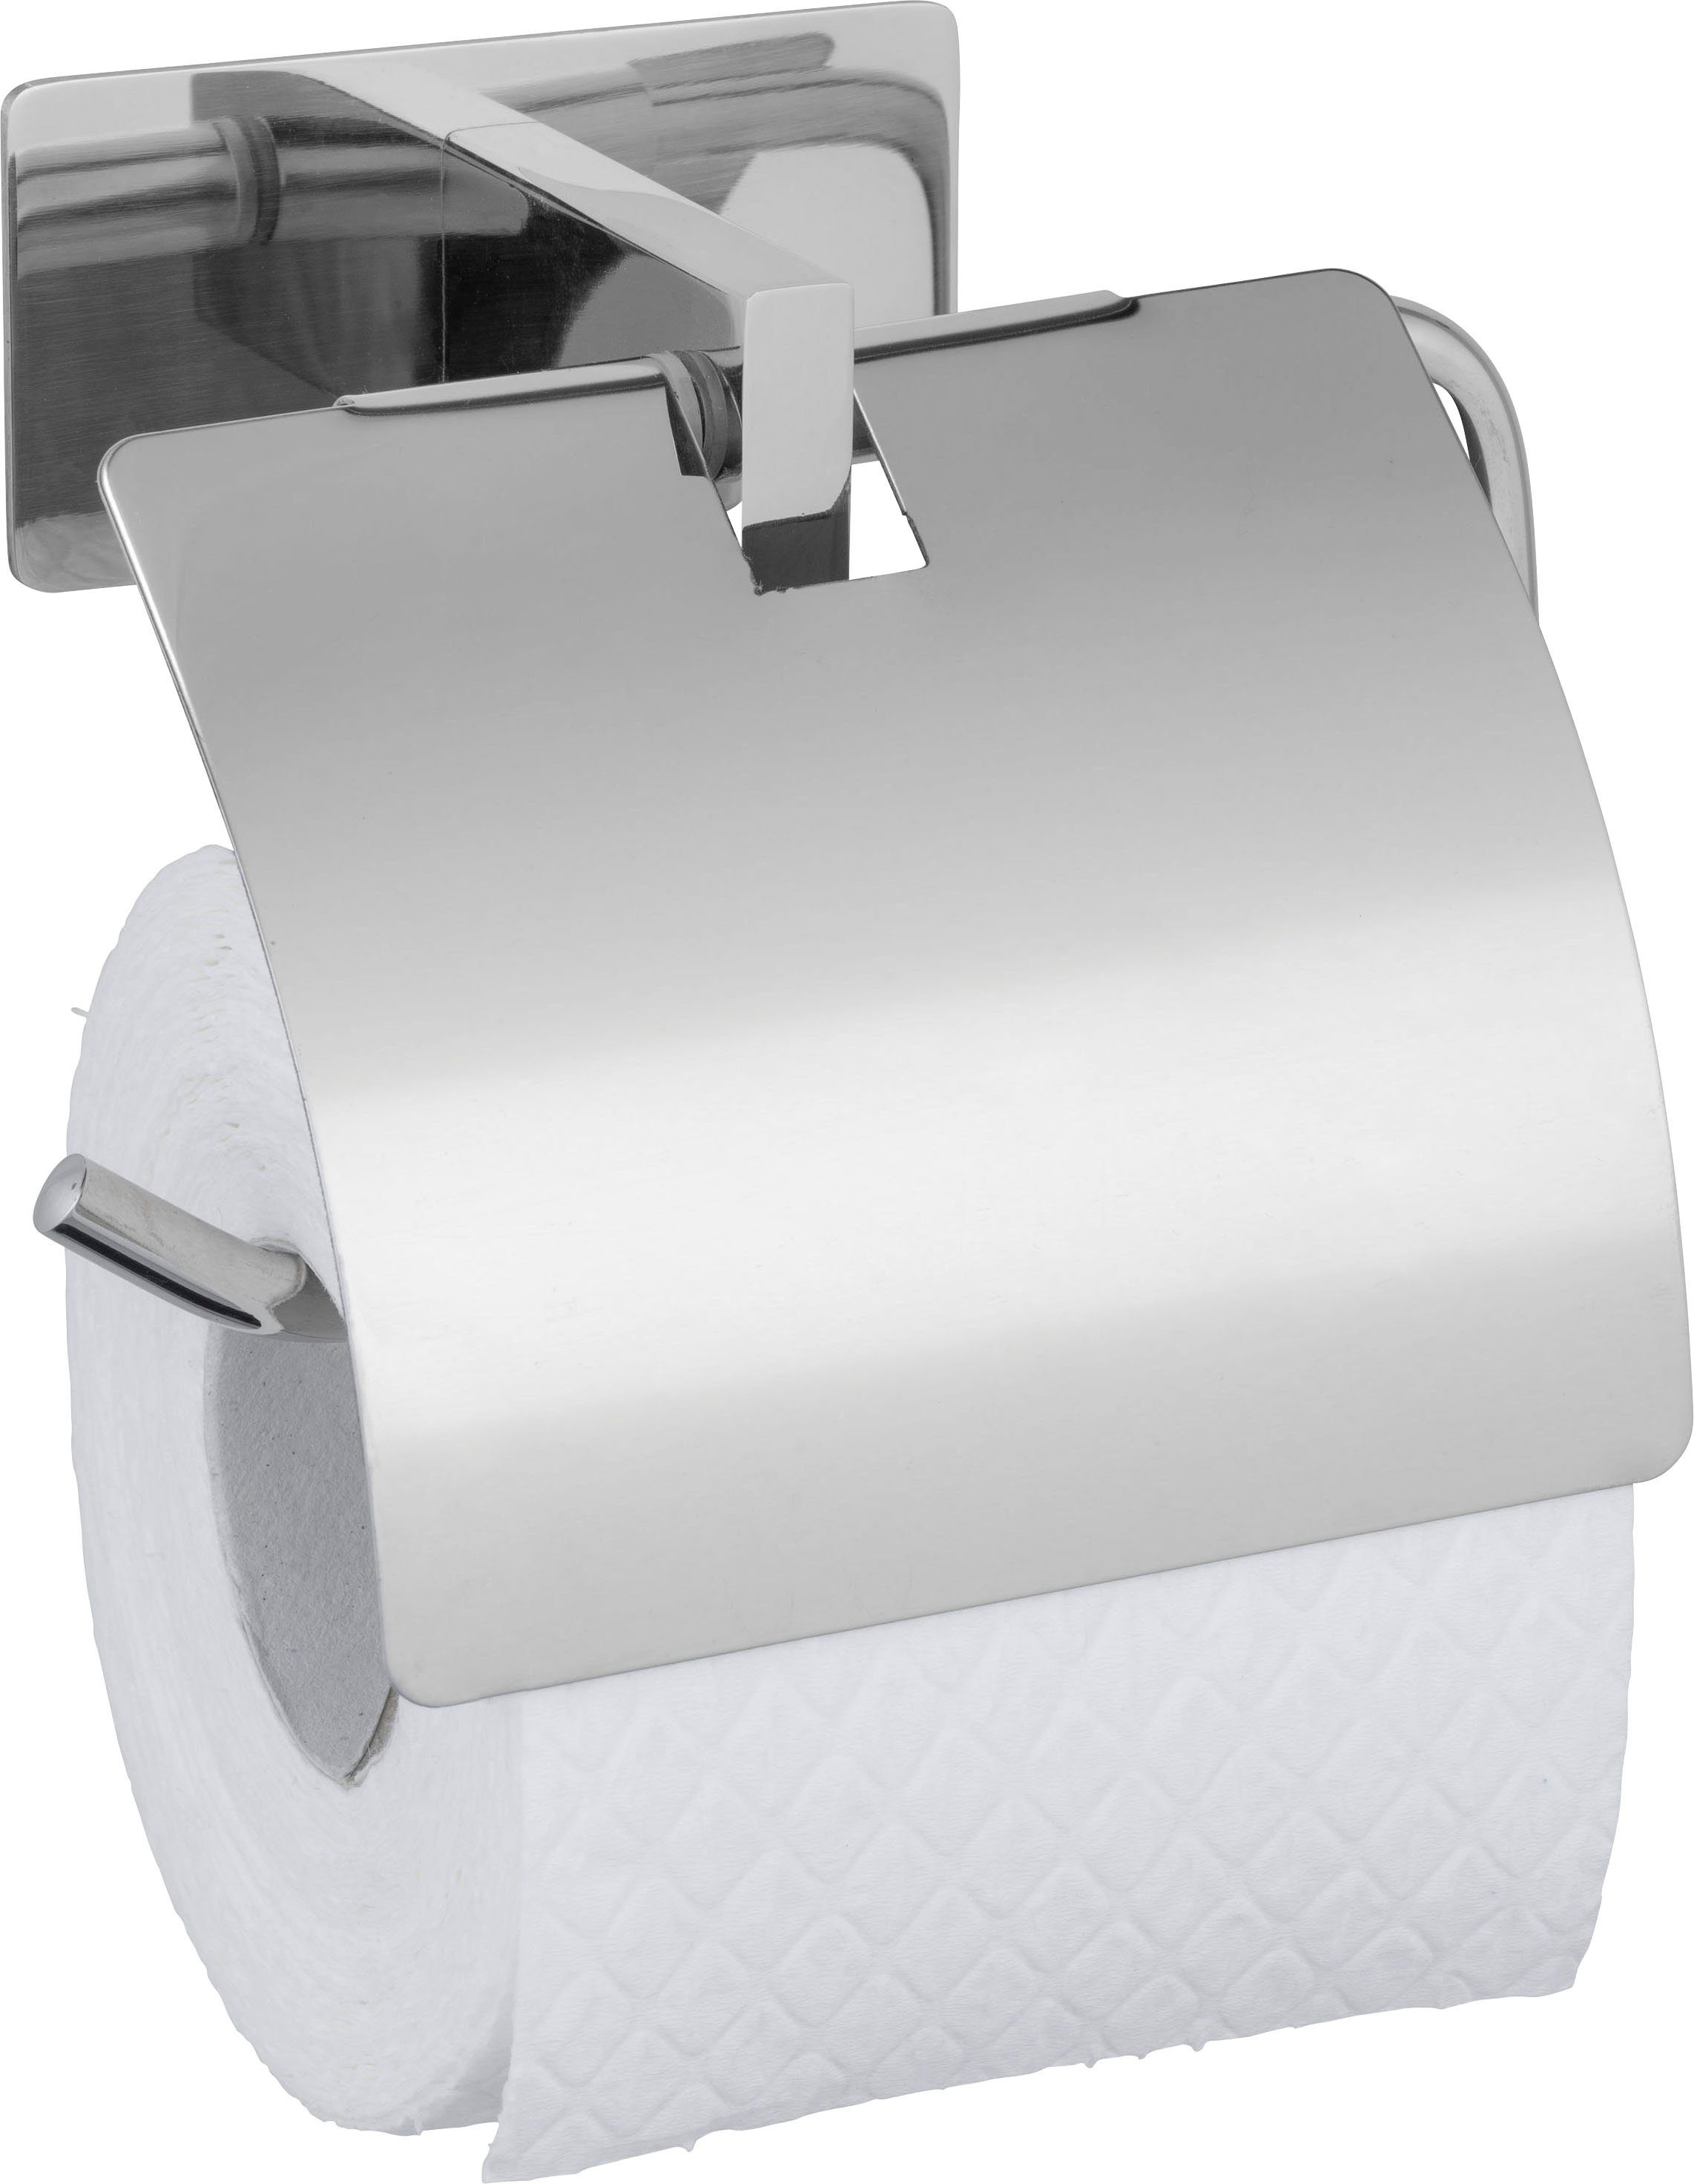 ohne bohren Shine, Genova WENKO Turbo-Loc® Toilettenpapierhalter Befestigen